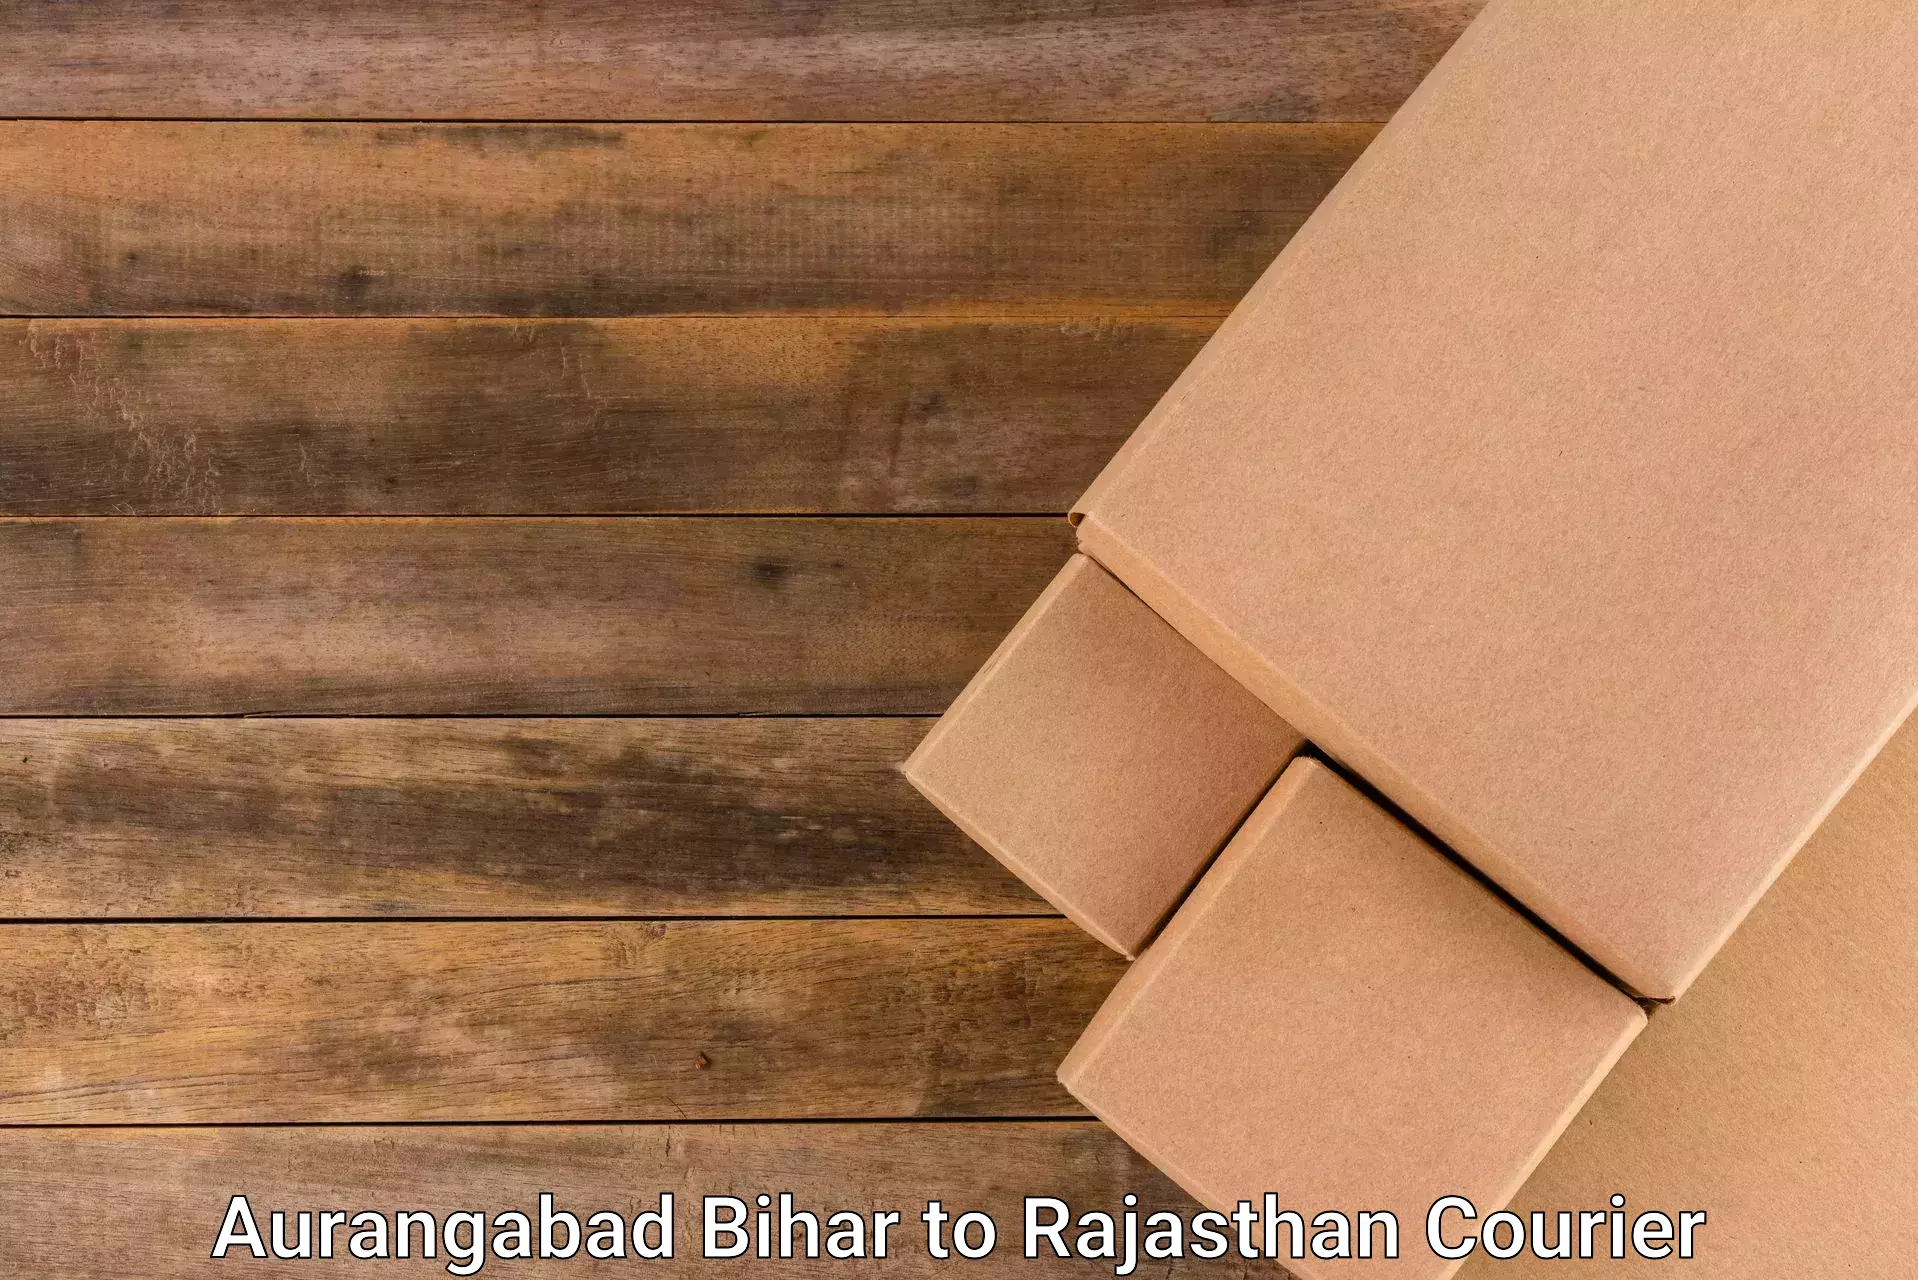 Sustainable delivery practices Aurangabad Bihar to Chittorgarh